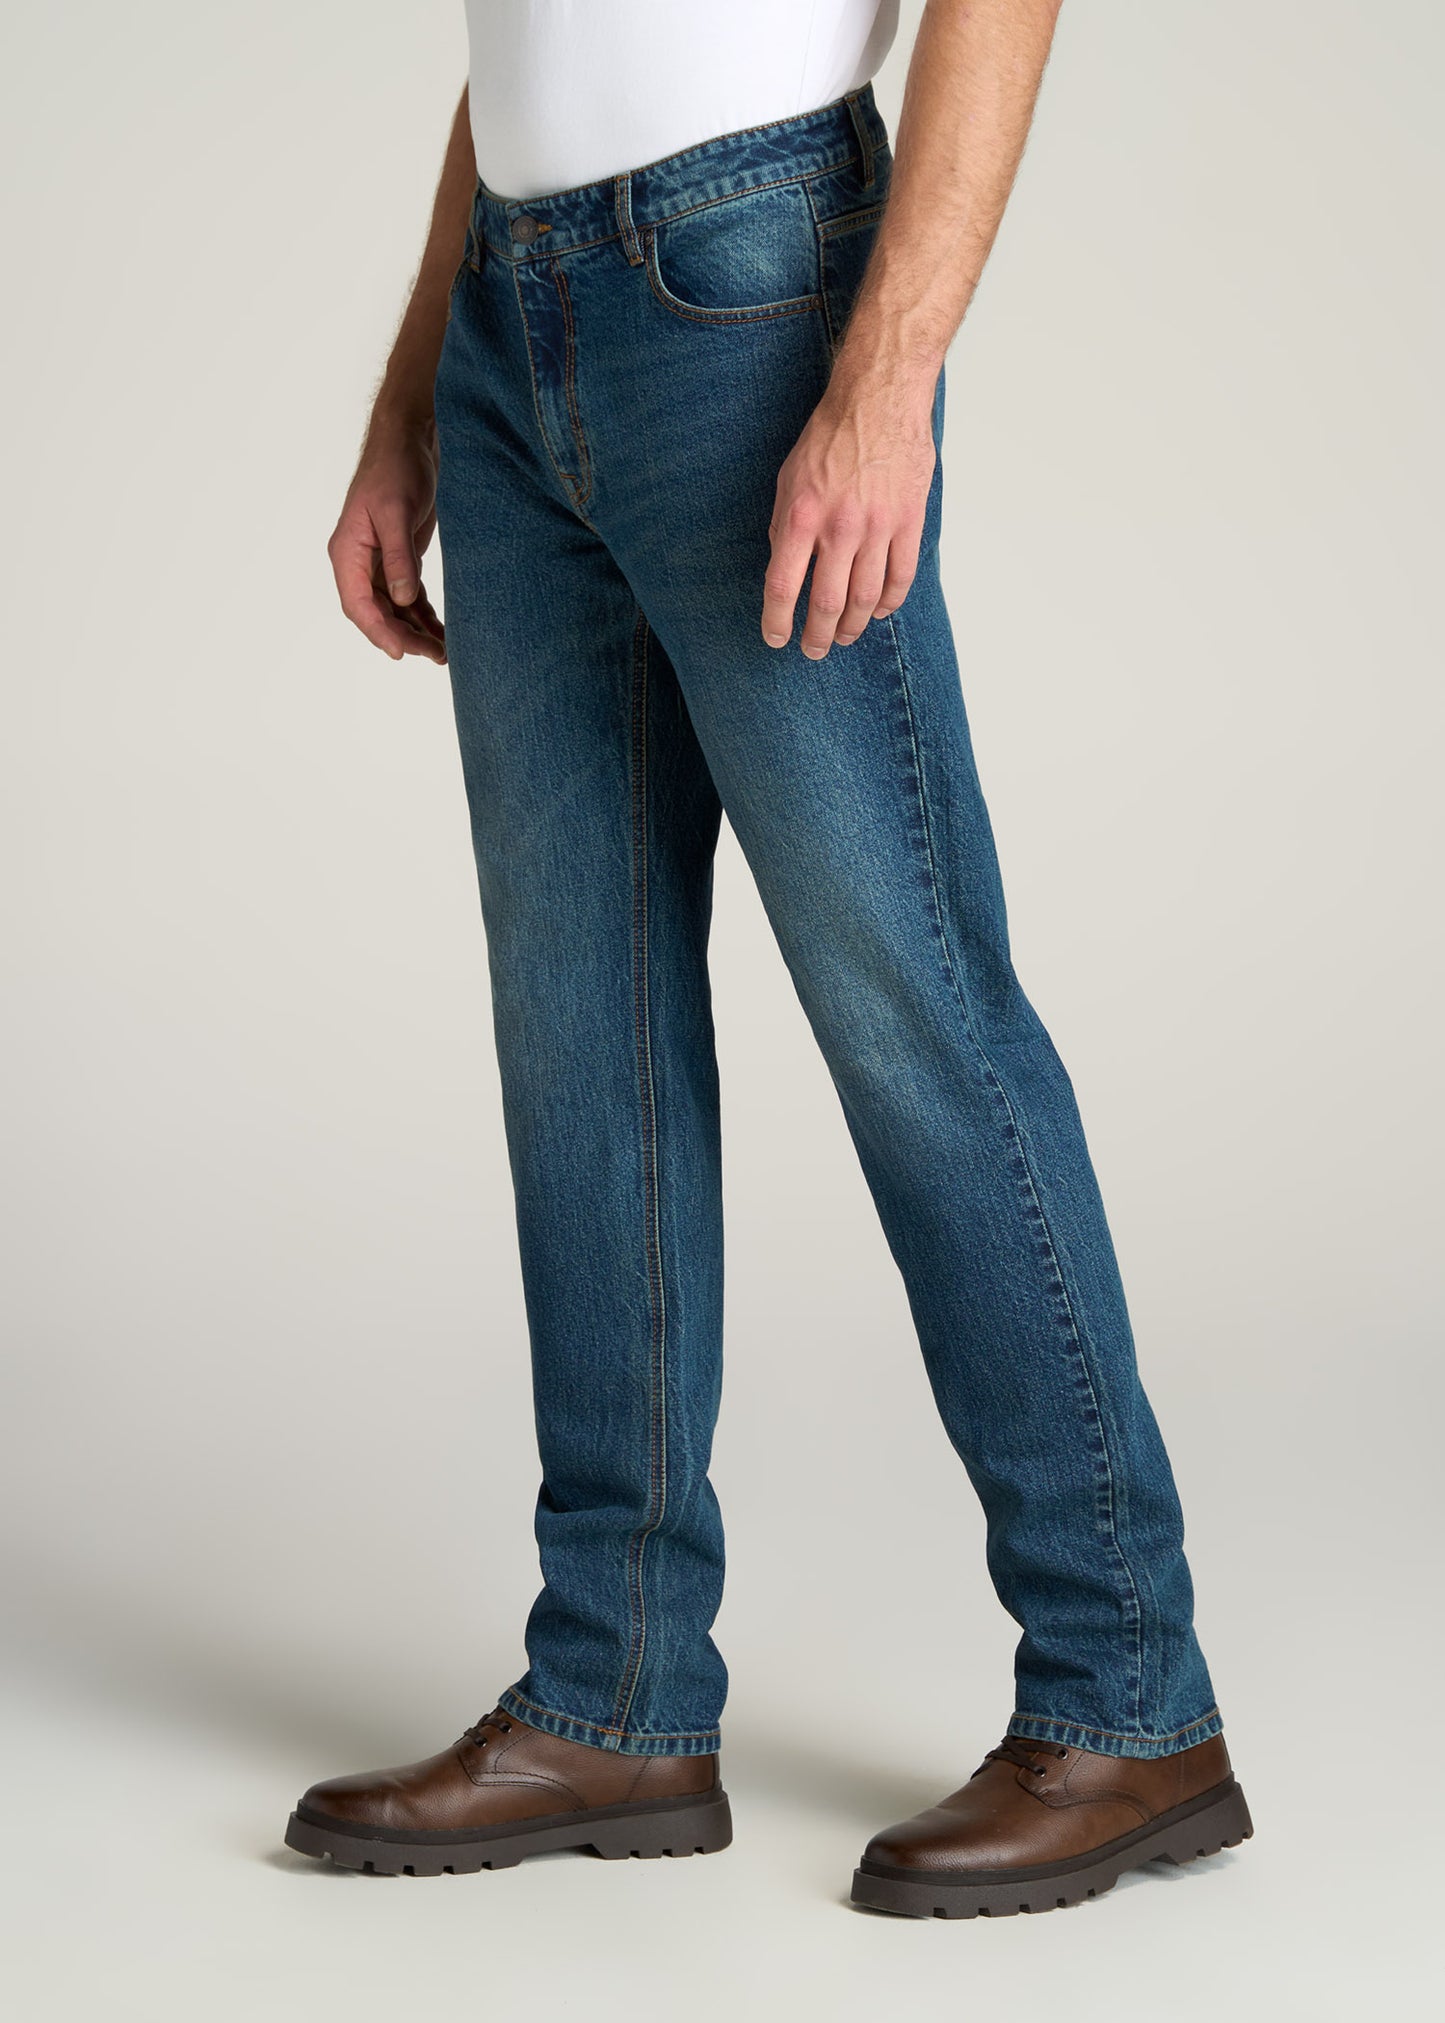       American-Tall-Men-LJ-Jeans-Straight-Leg-Machine-Blue-side